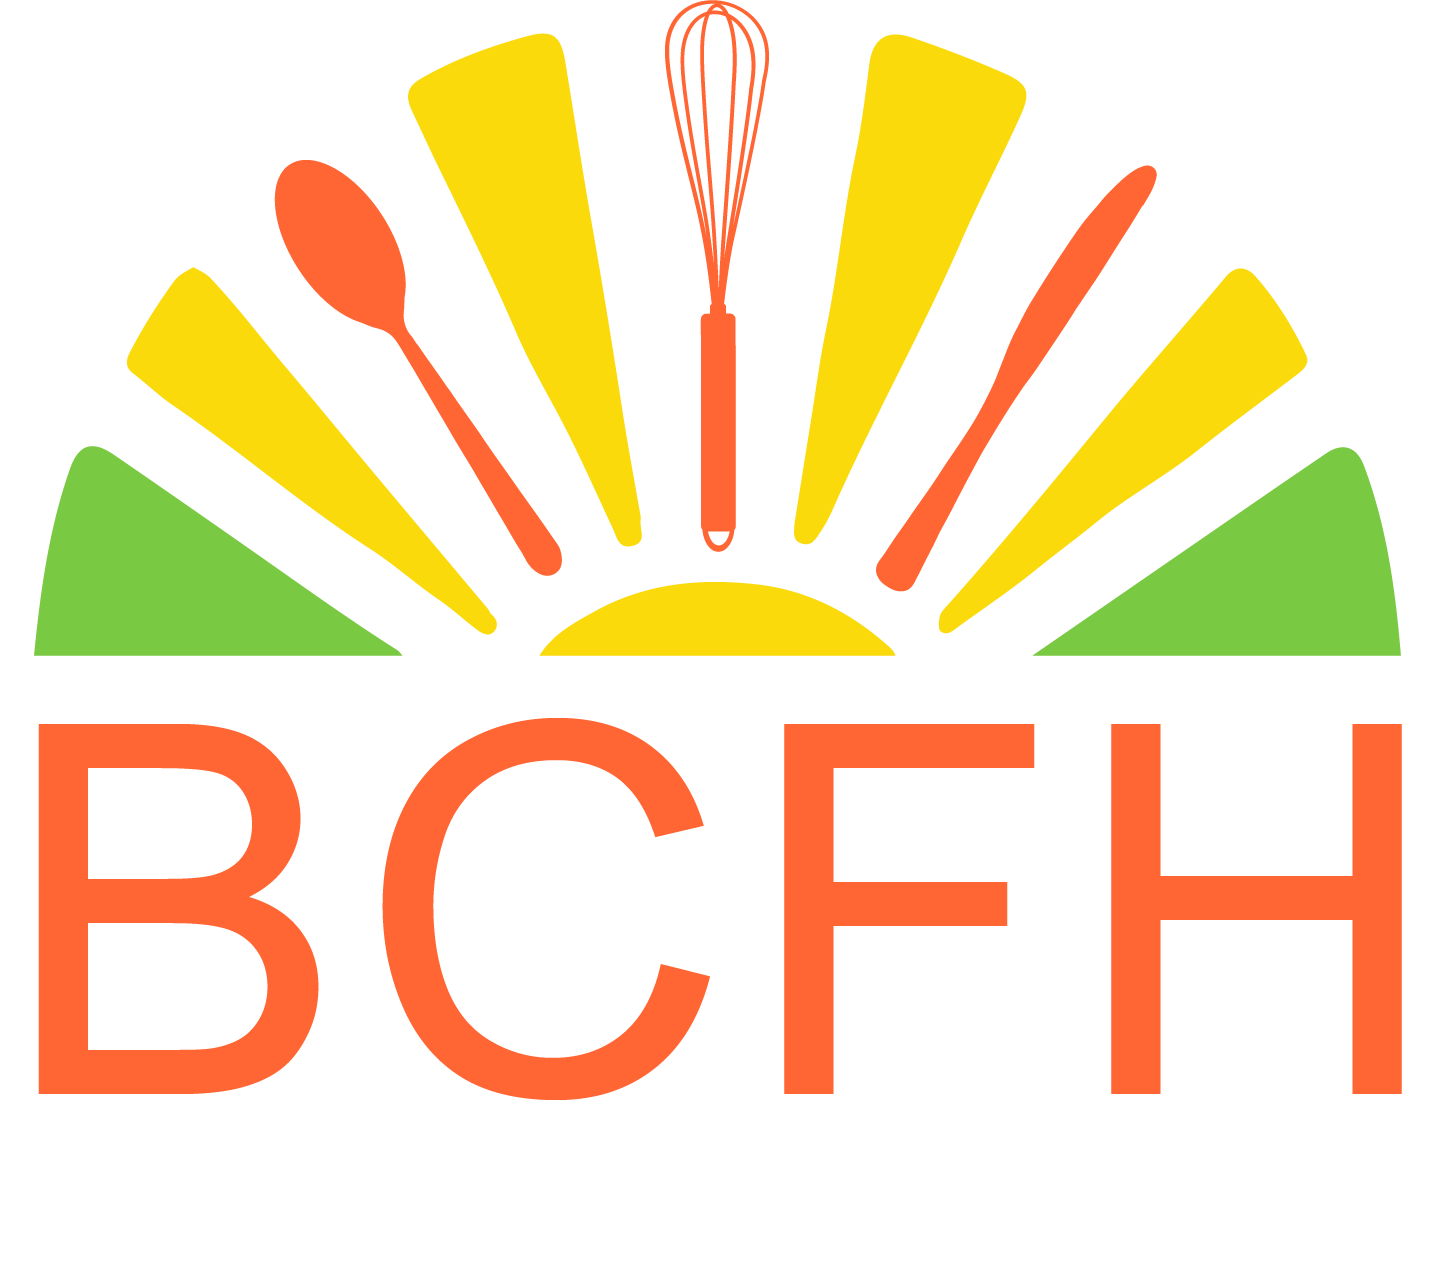 The British Columbia Food History Network